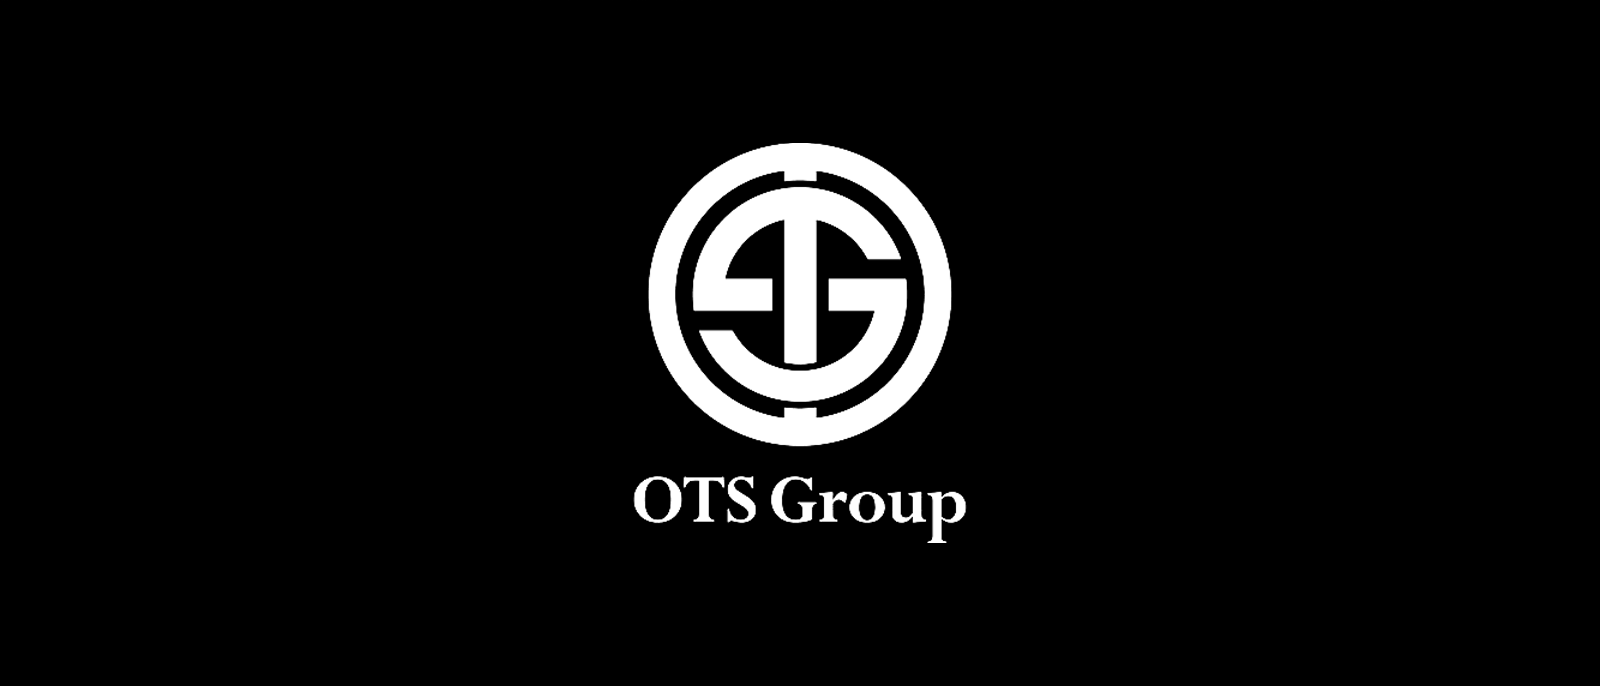 OTS Group